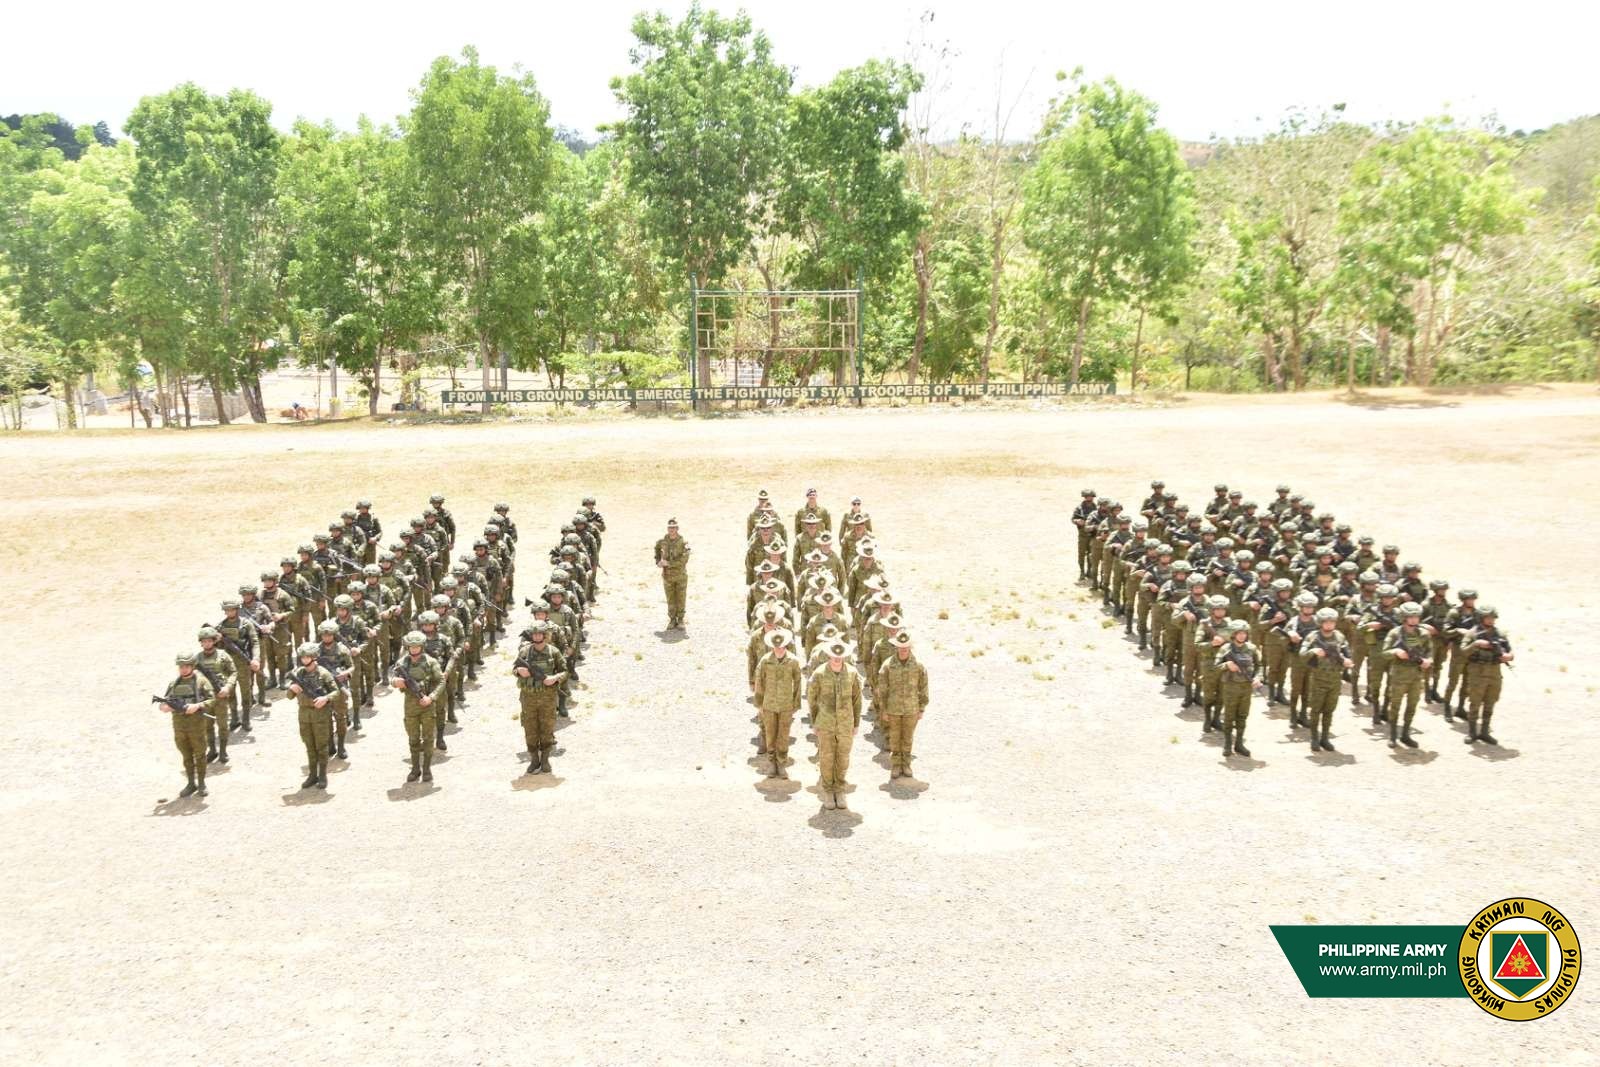 PA, Australian Army kick-off Exercise 